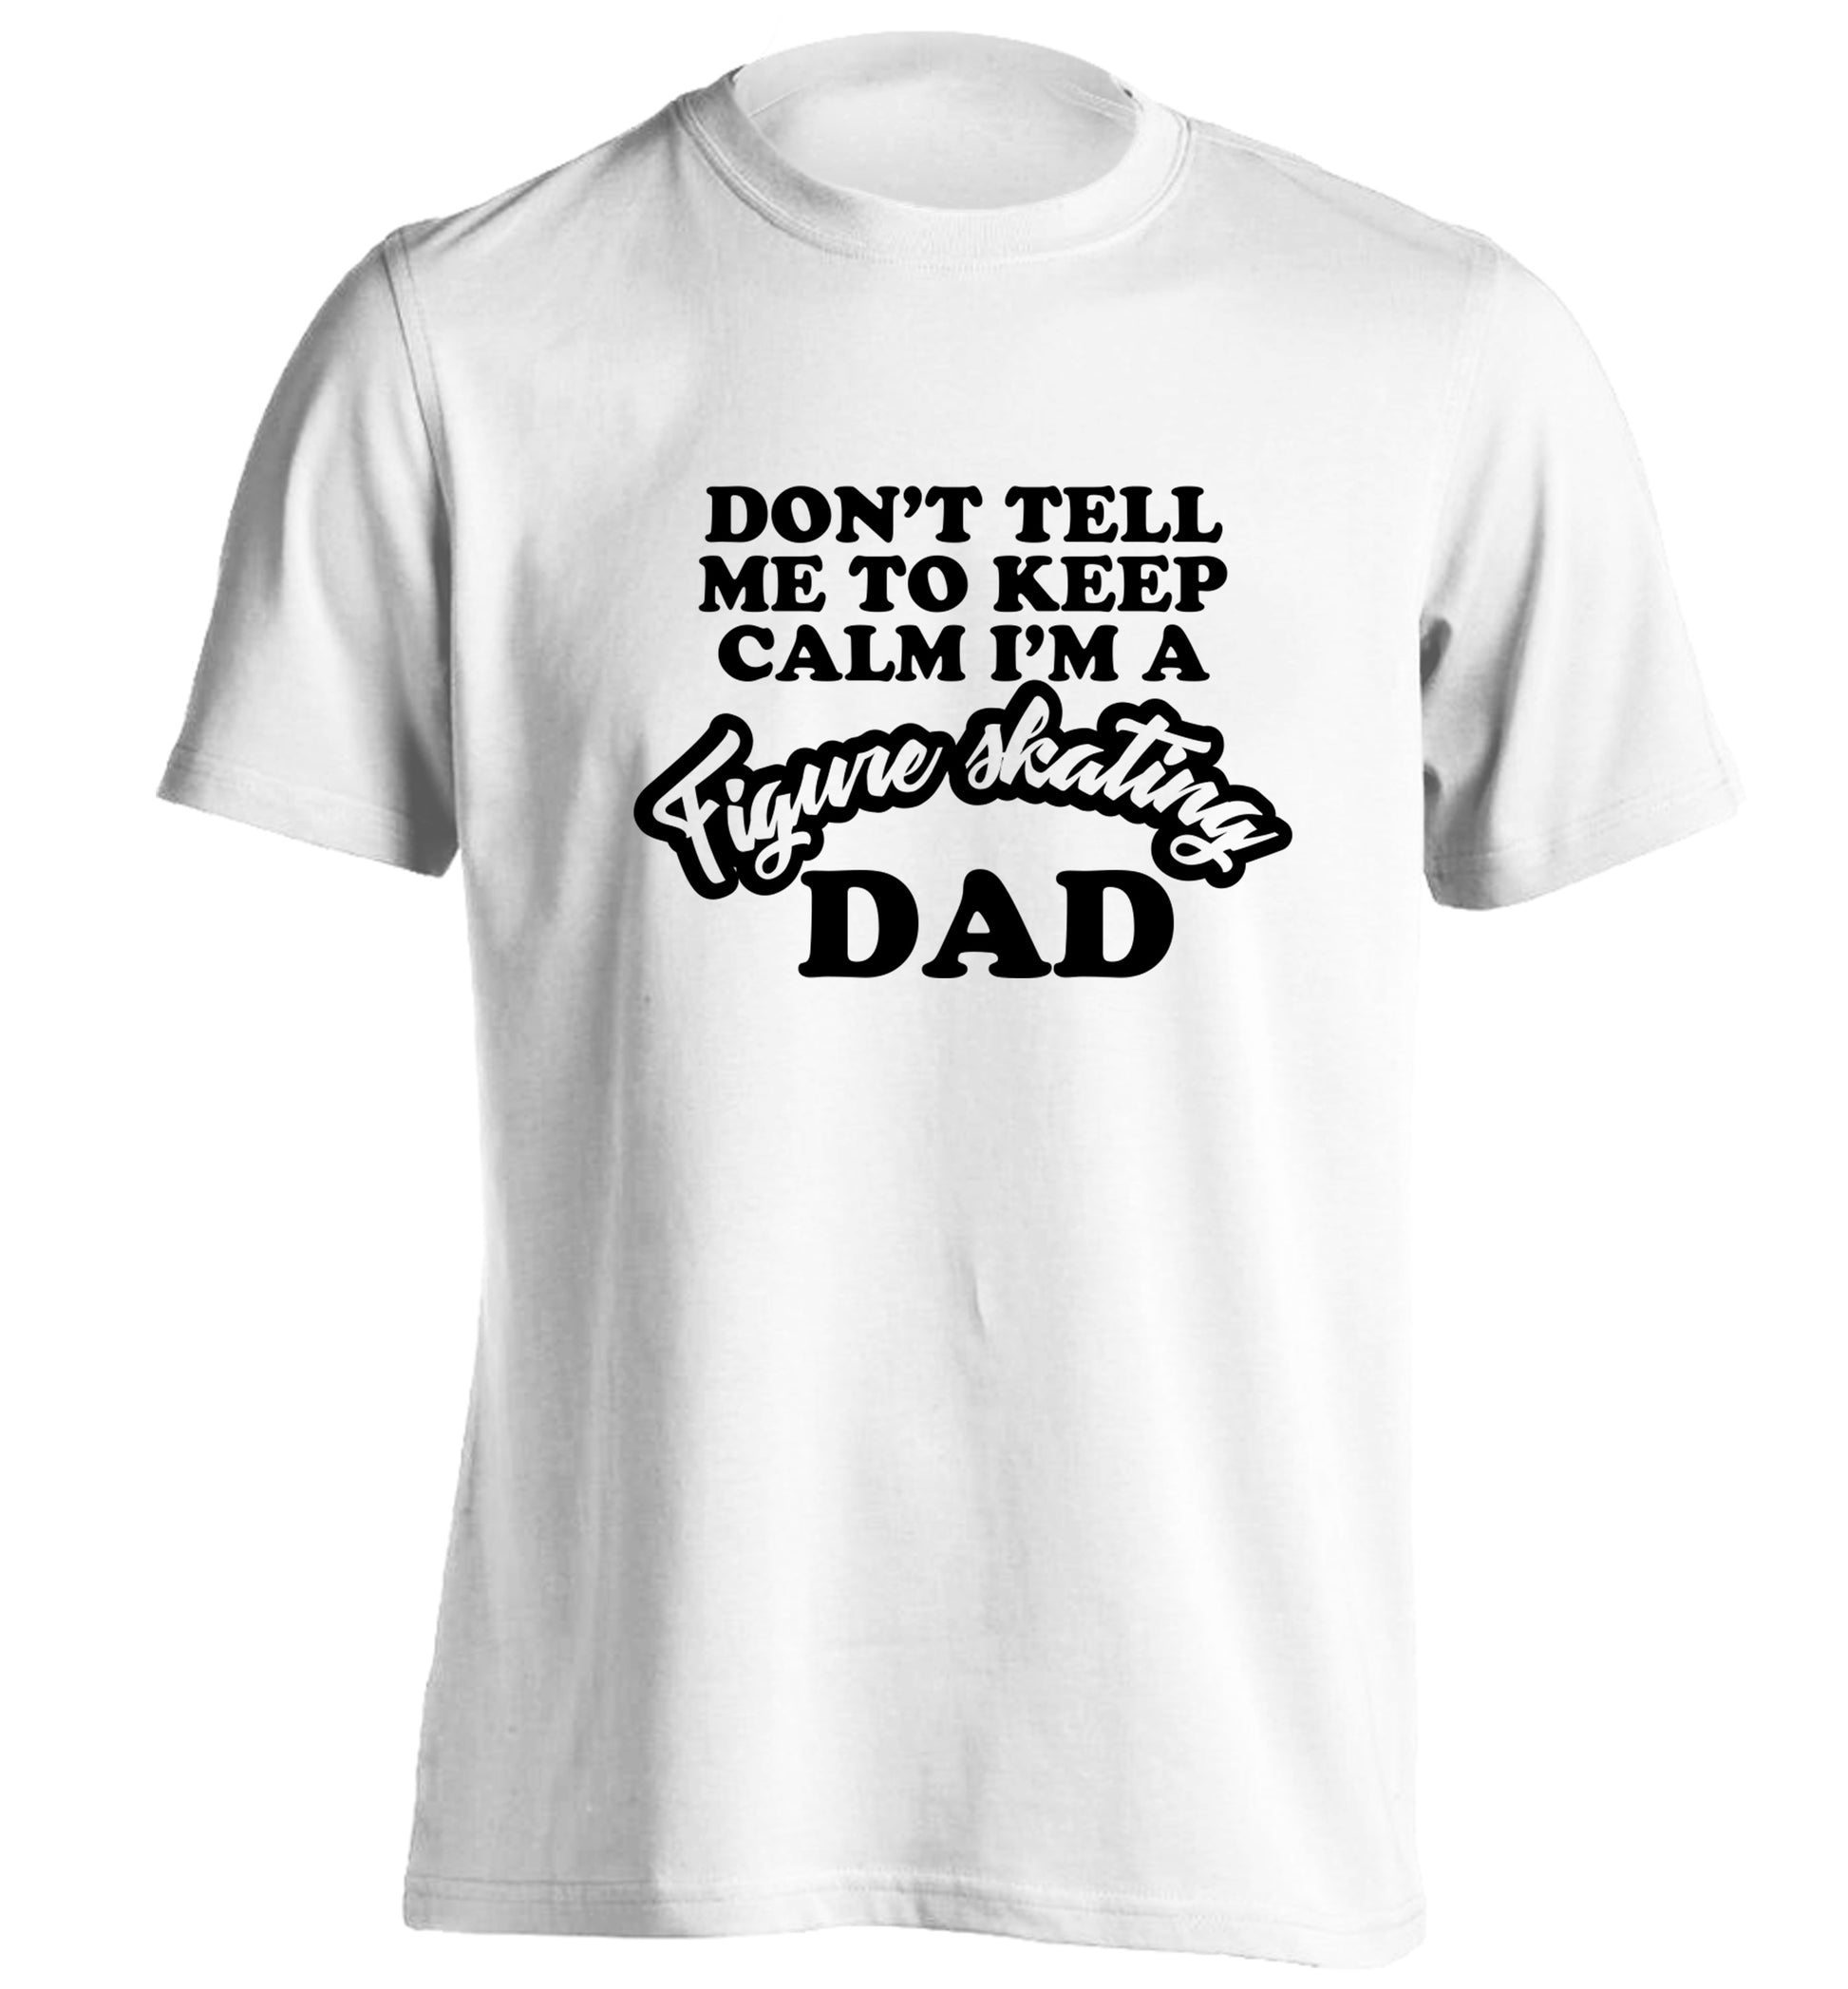 Don't tell me to keep calm I'm a figure skating dad adults unisexwhite Tshirt 2XL